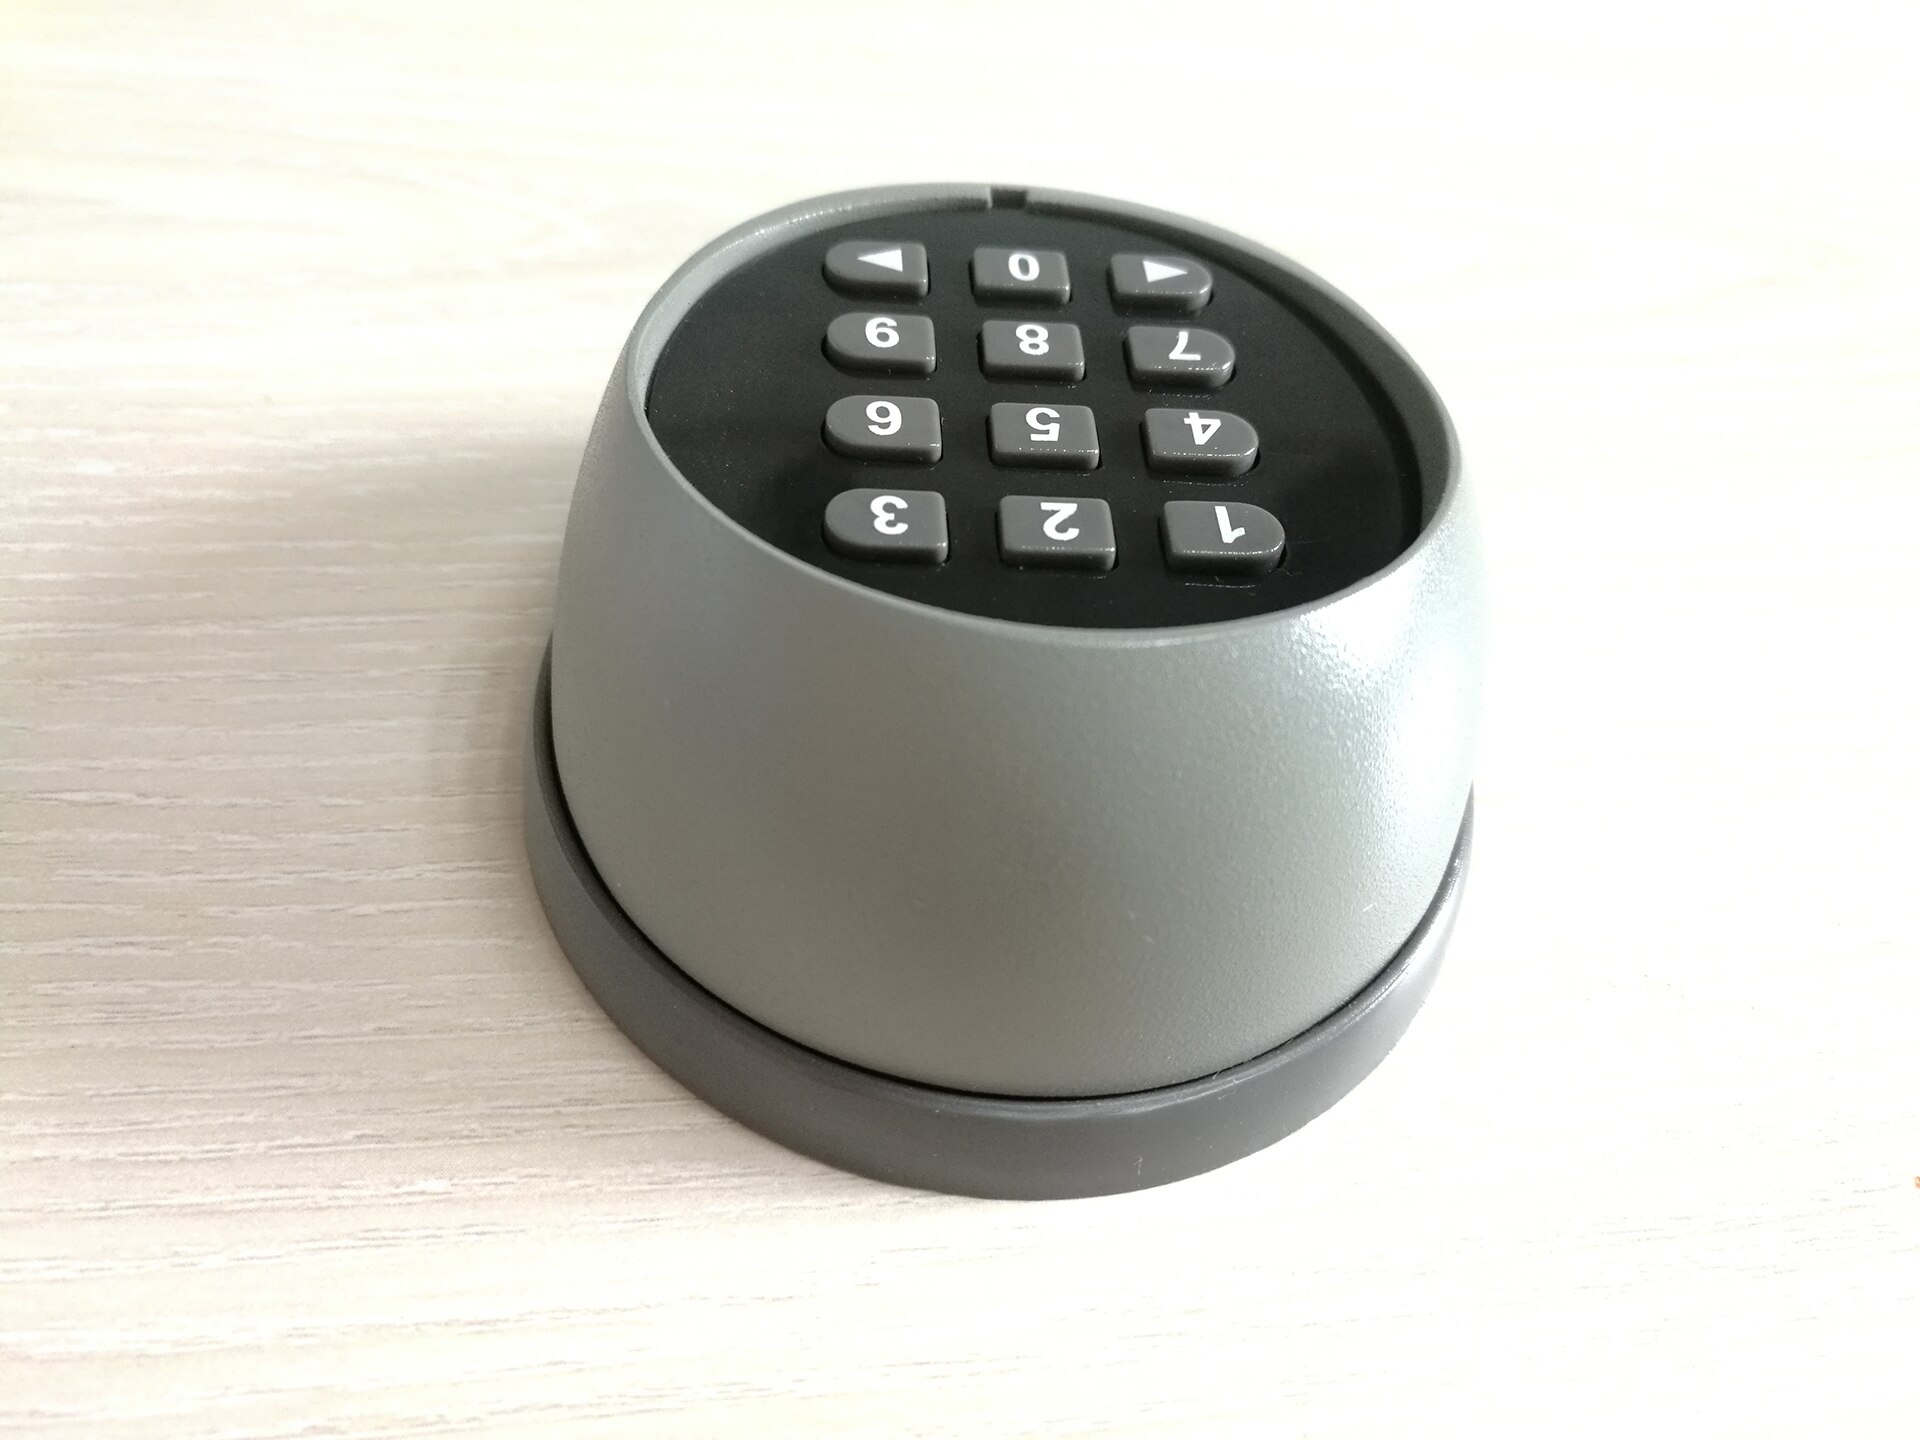 Door Lock Access Control Wireless Keypad password switch kit for gate door MOTOR access remote control